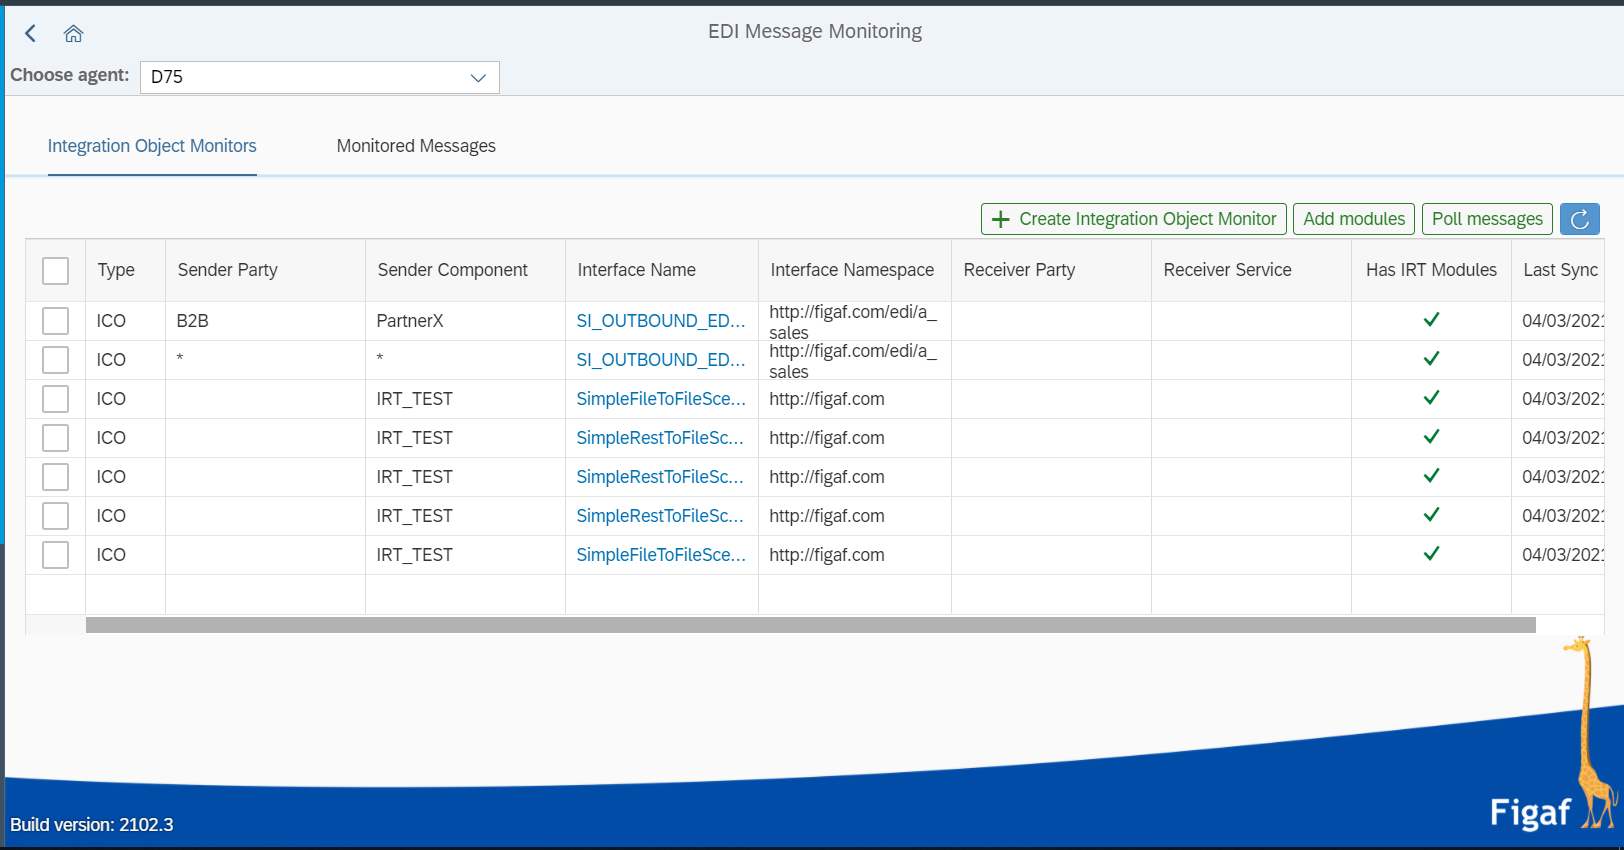 edi message monitoring example